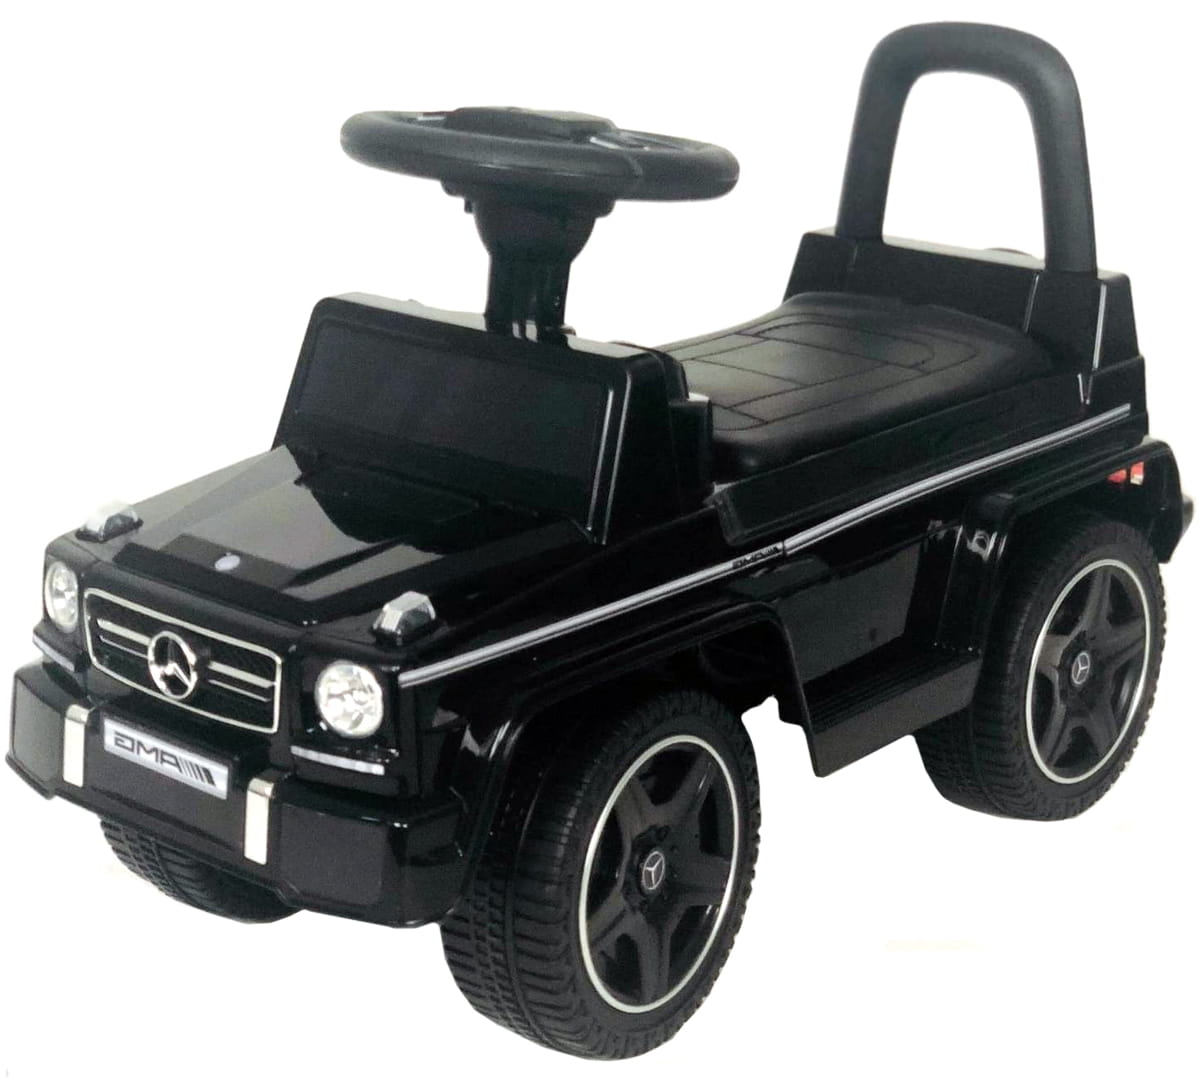 Толокар мерседес. Каталка RIVERTOYS Mercedes jq663 (g63). Каталка Baby Care g63 чёрный. Машинка каталка Мерседес Бенц. Машинка толокар Мерседес.